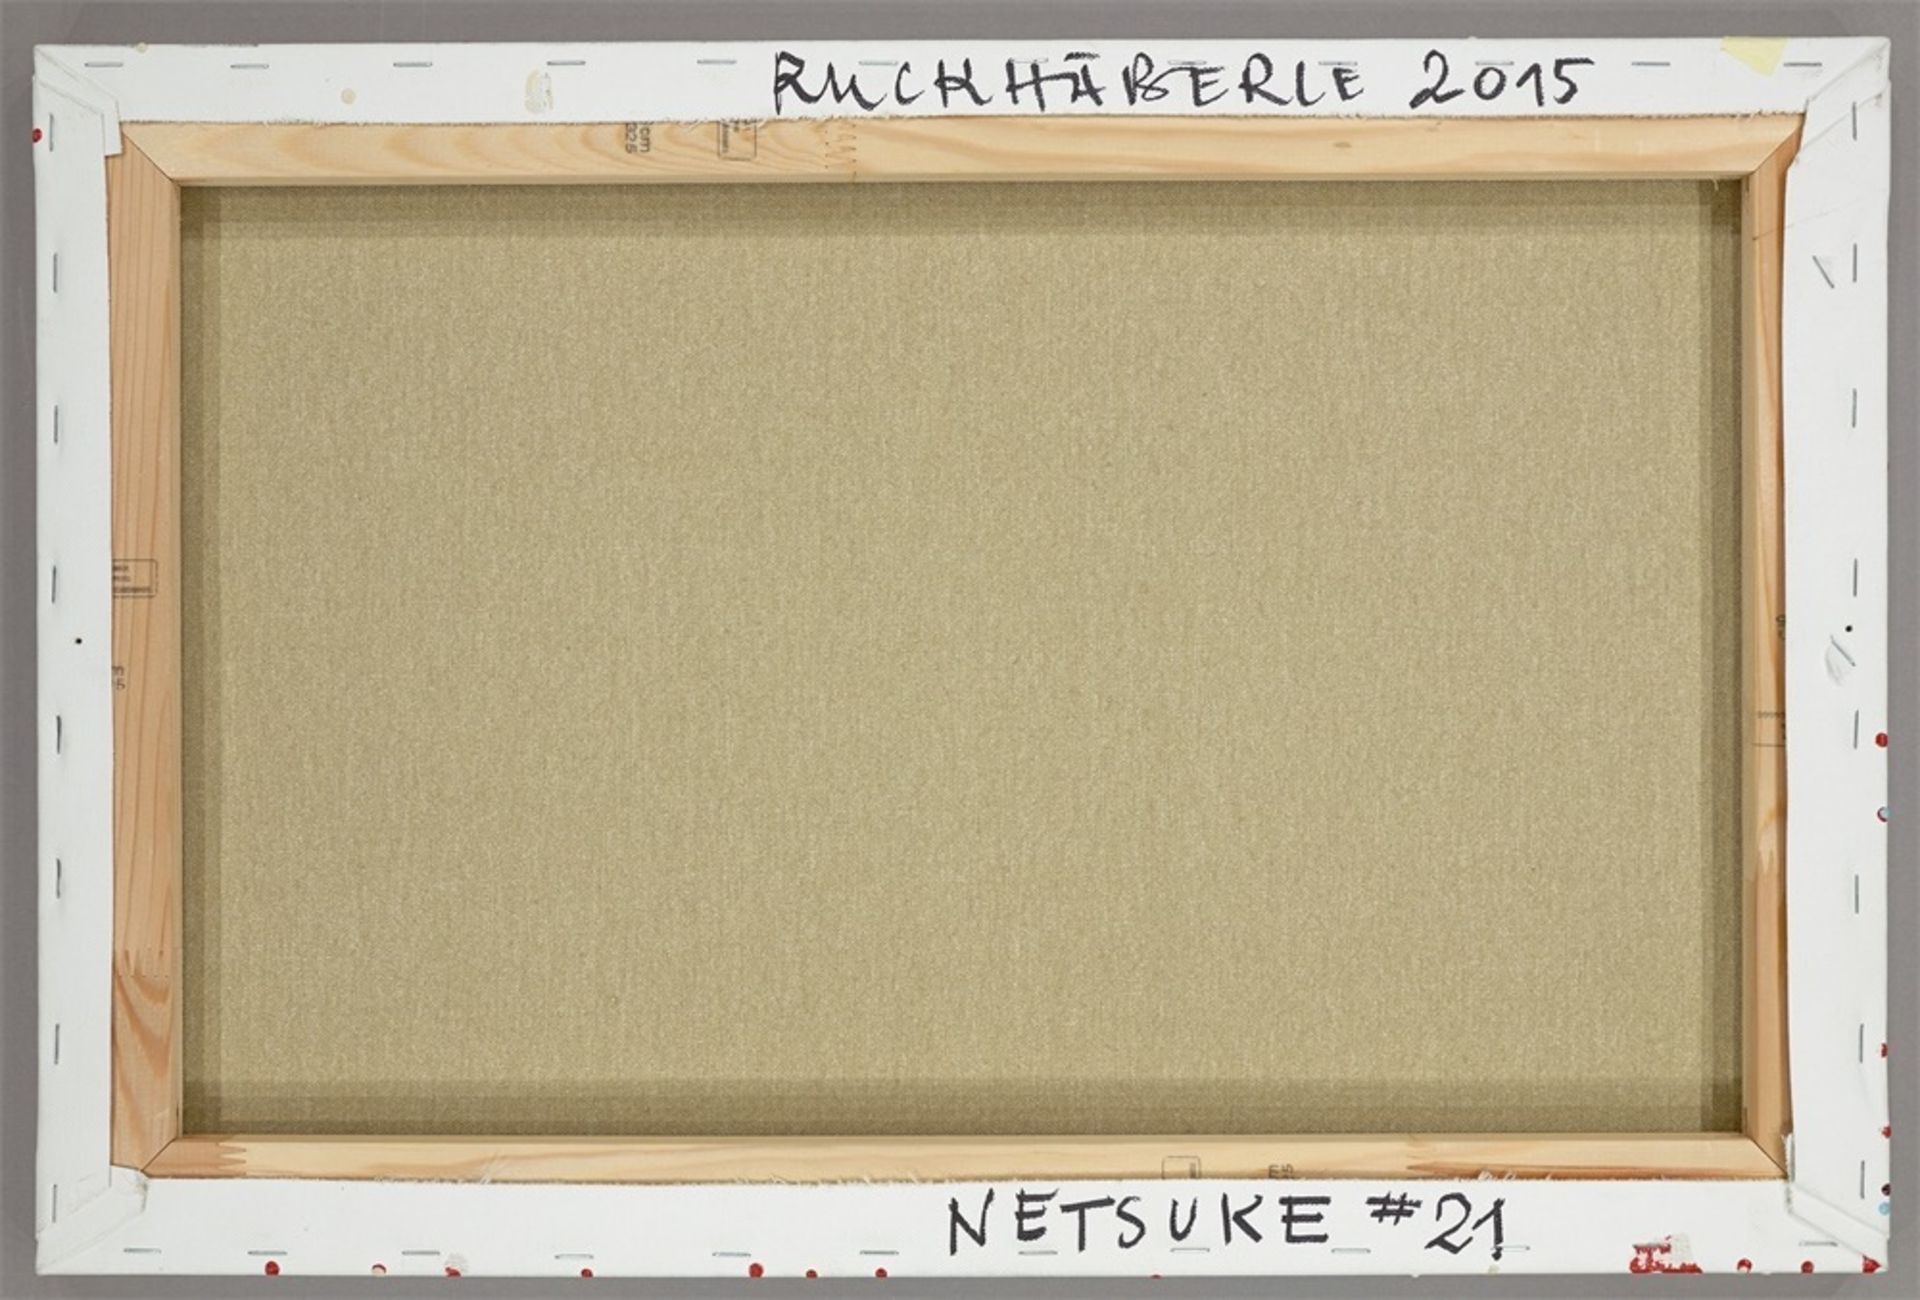 Christoph Ruckhäberle. ”Netsuke #21”. 2015 - Image 3 of 4